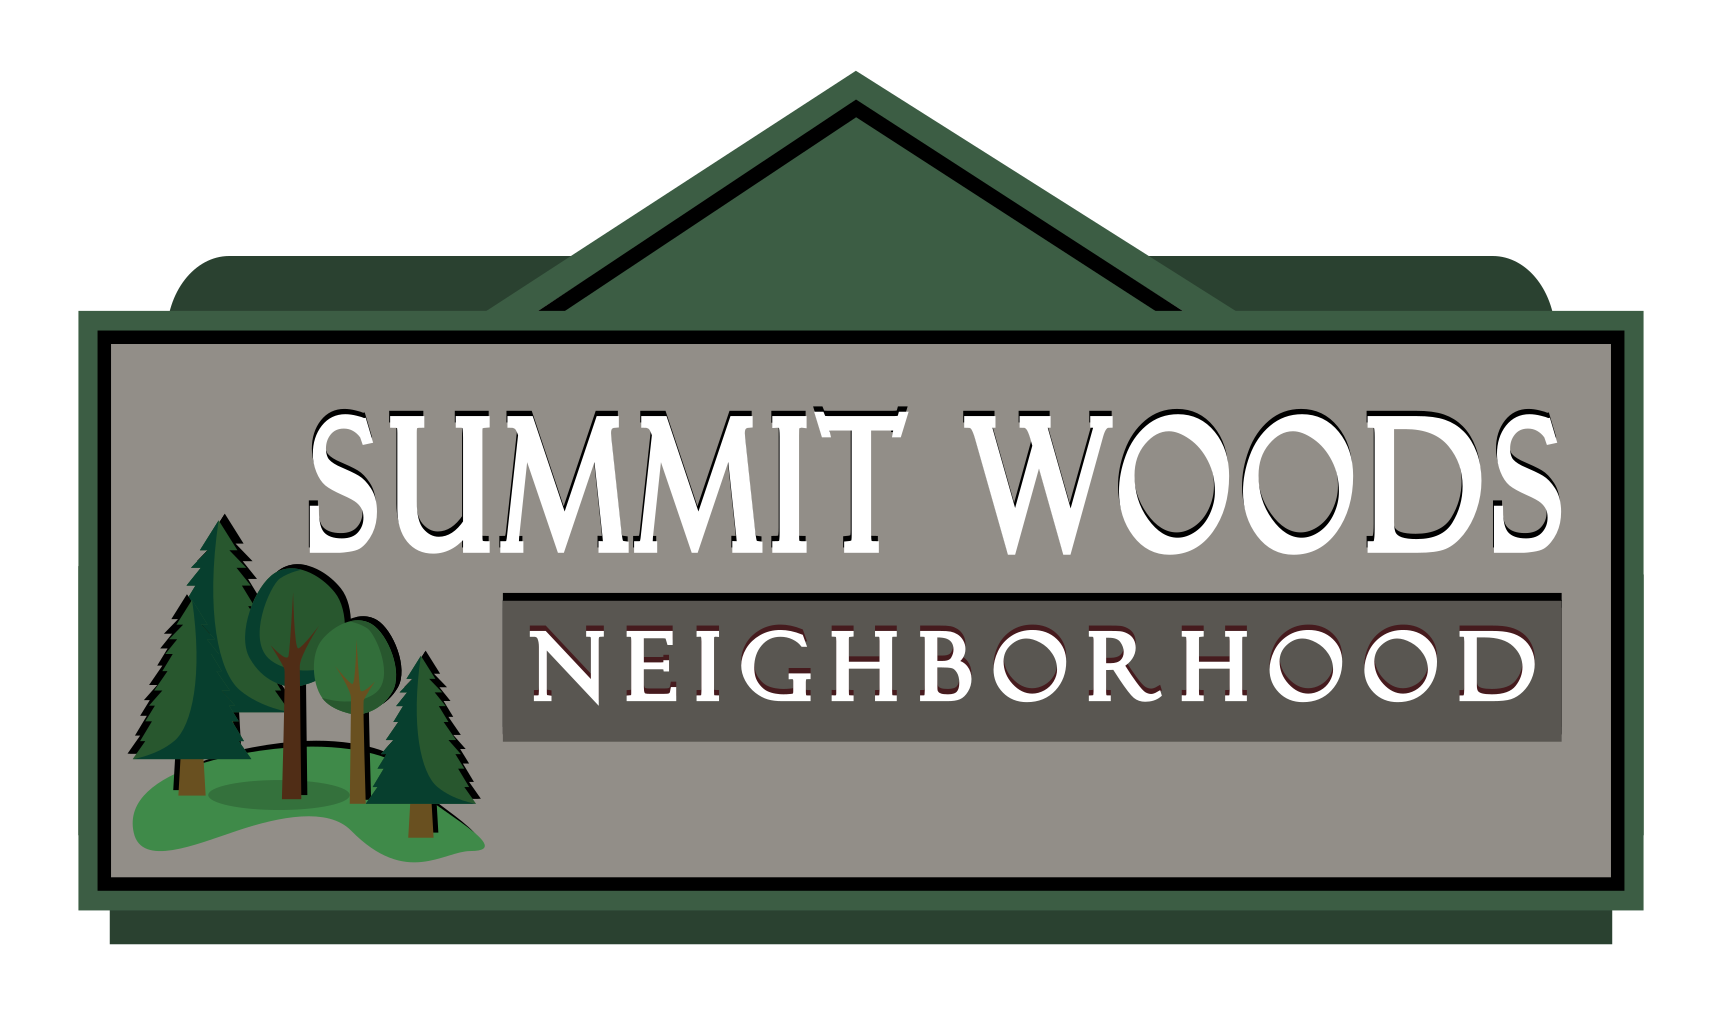 Getting to Know Madison’s Summit Woods Neighborhood